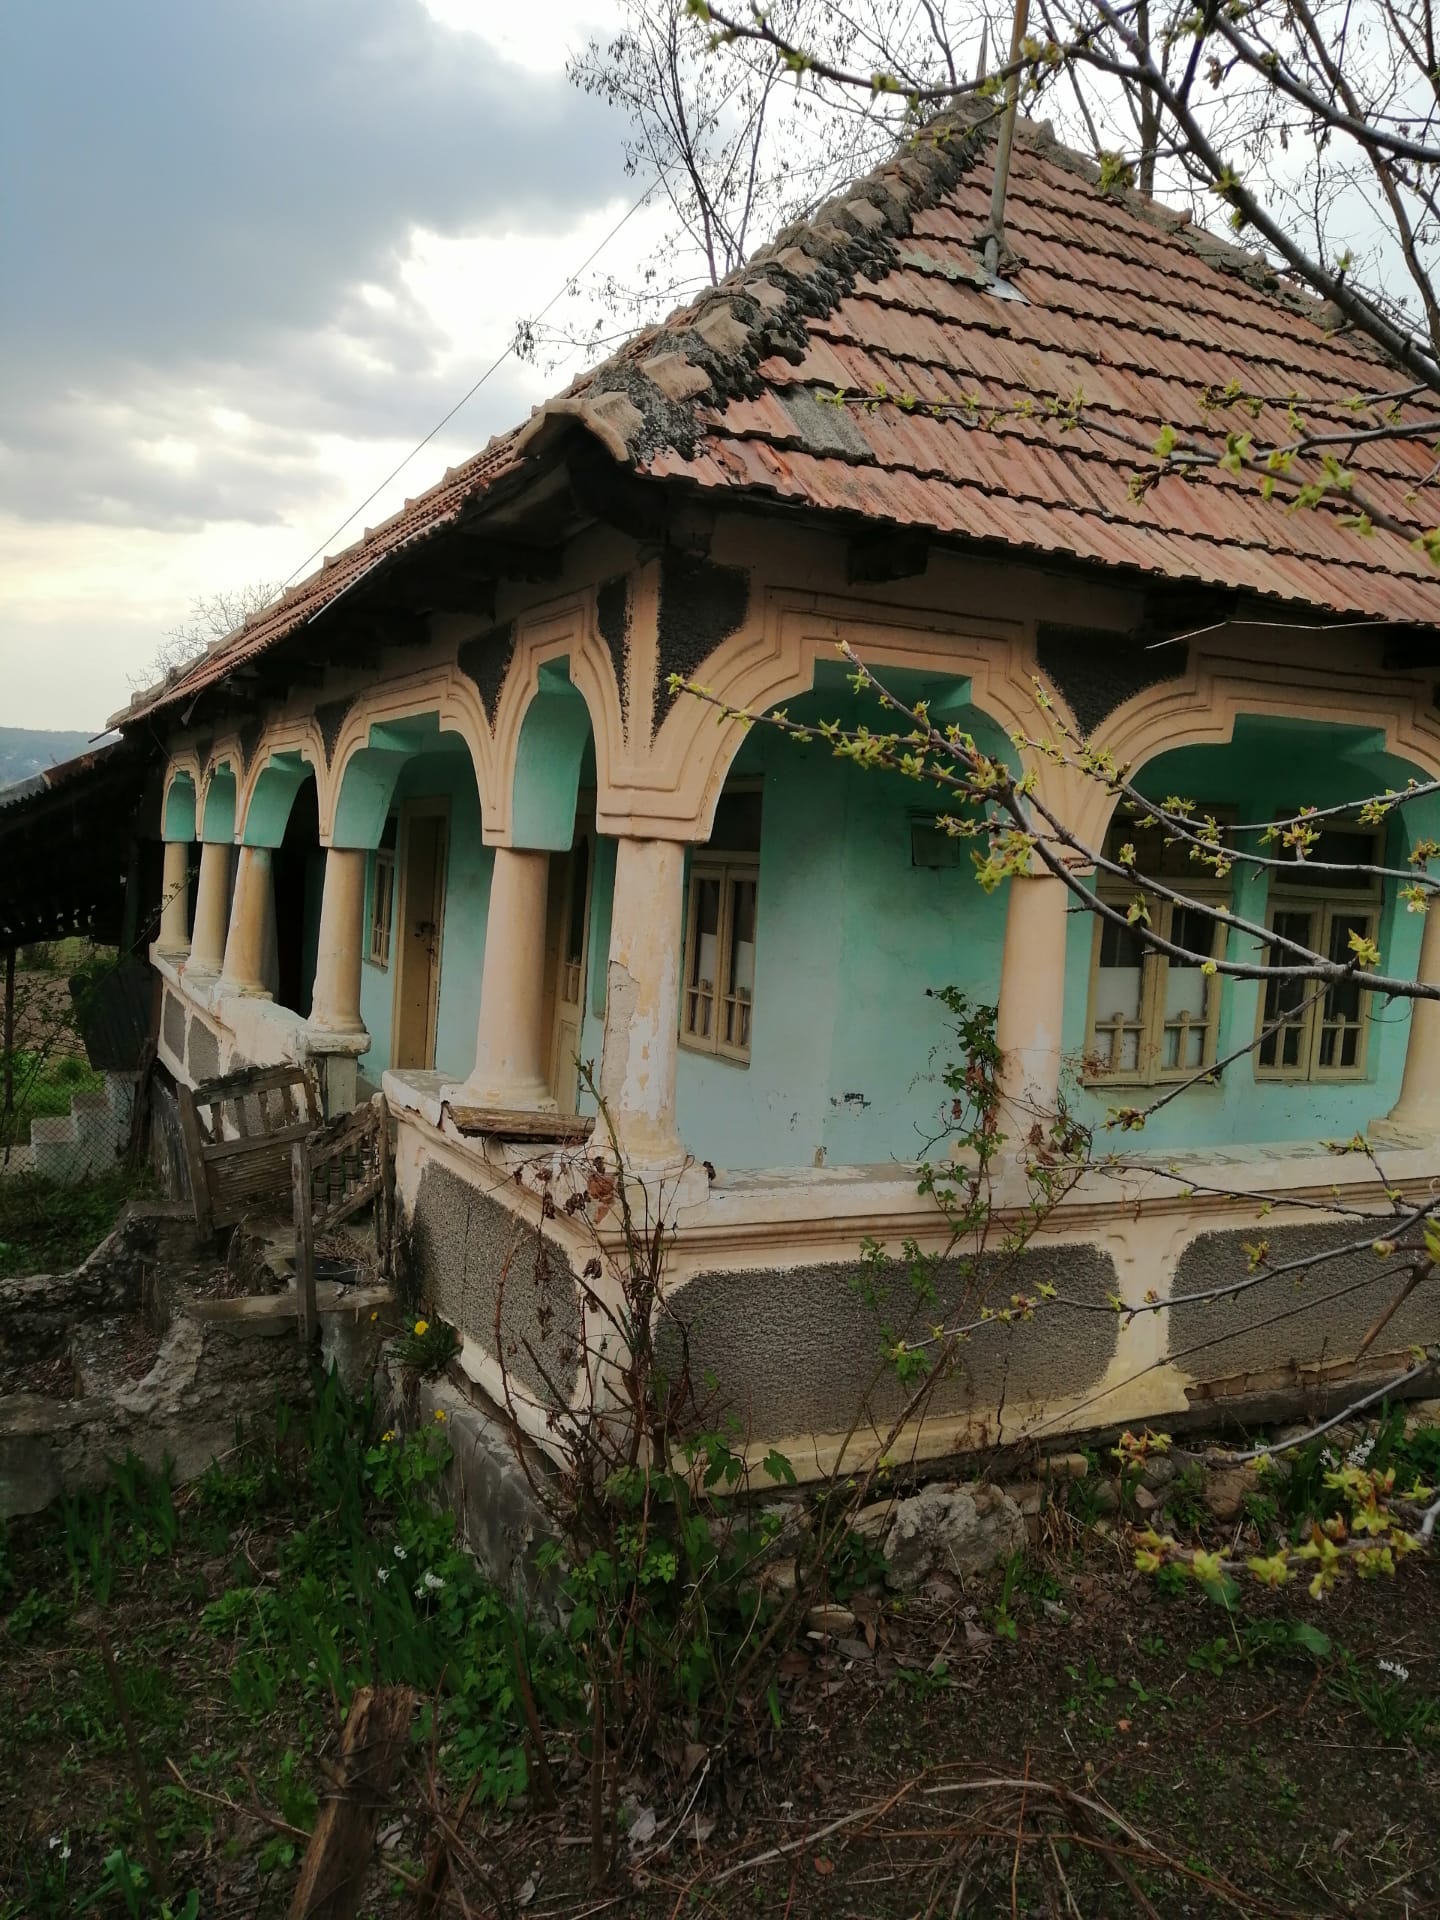 House for sale (Romania, Dambovita, Gheboieni) - Property under 100k